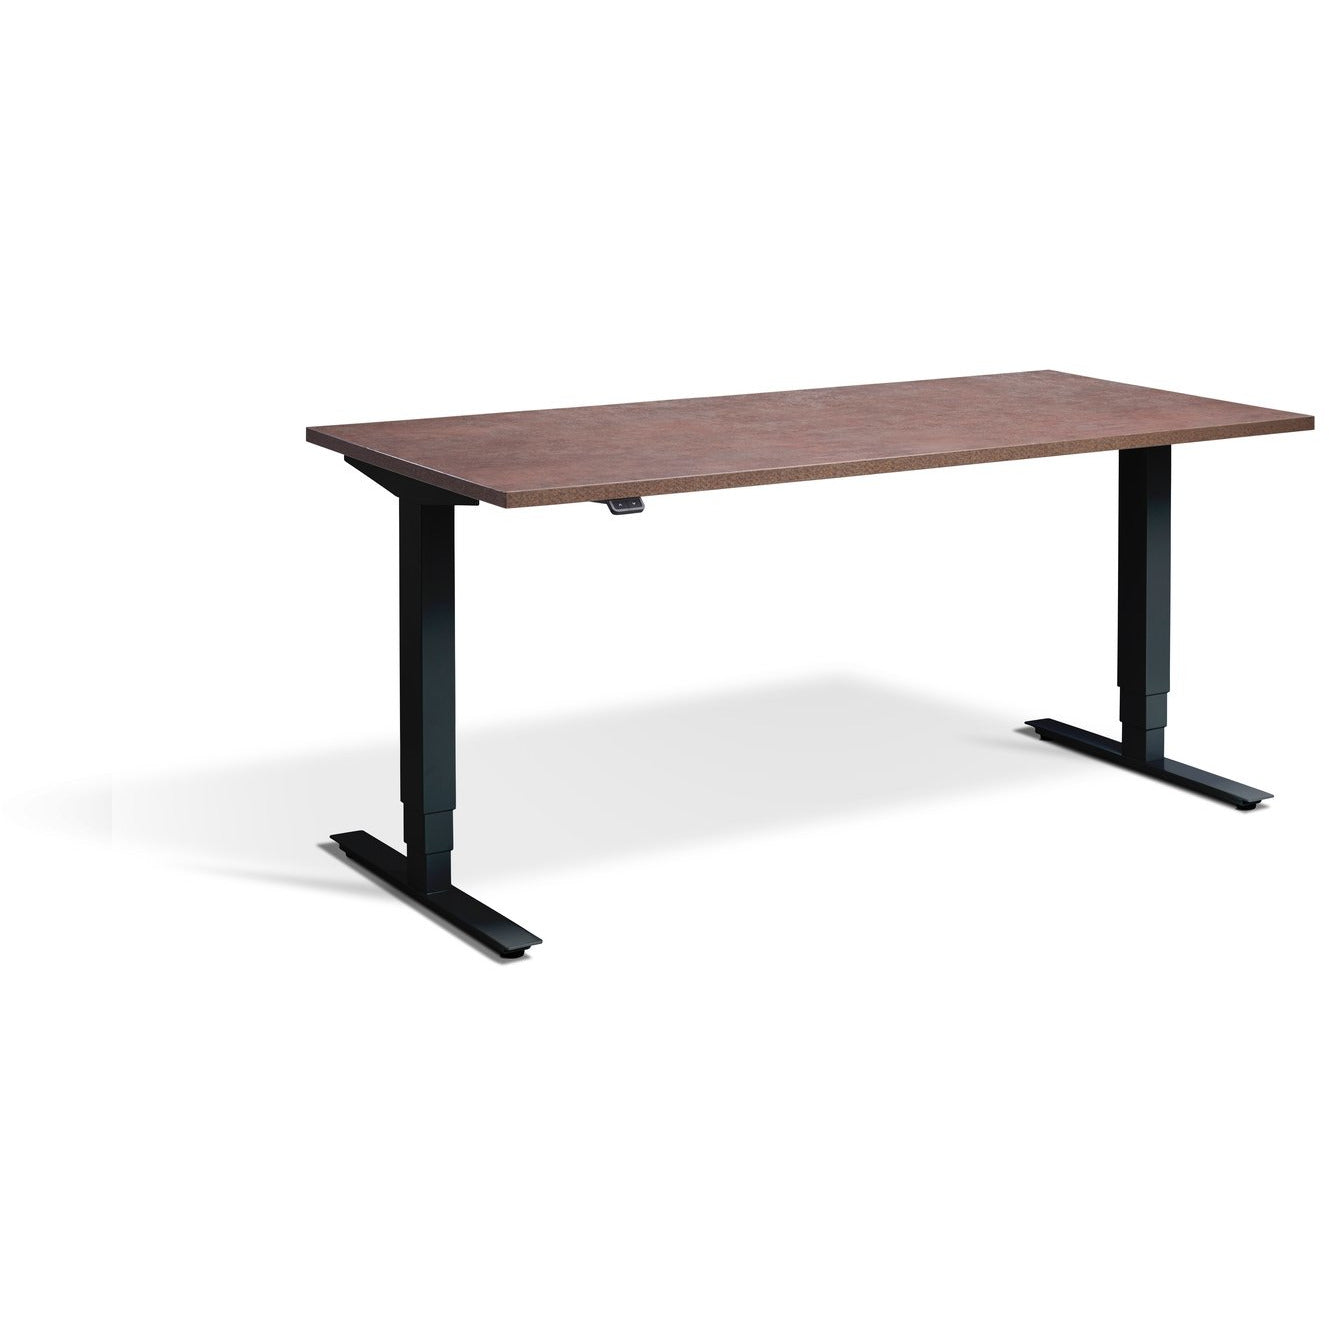 Advance 1800mm Wide - Height Adjustable Desk - UK Ergonomics